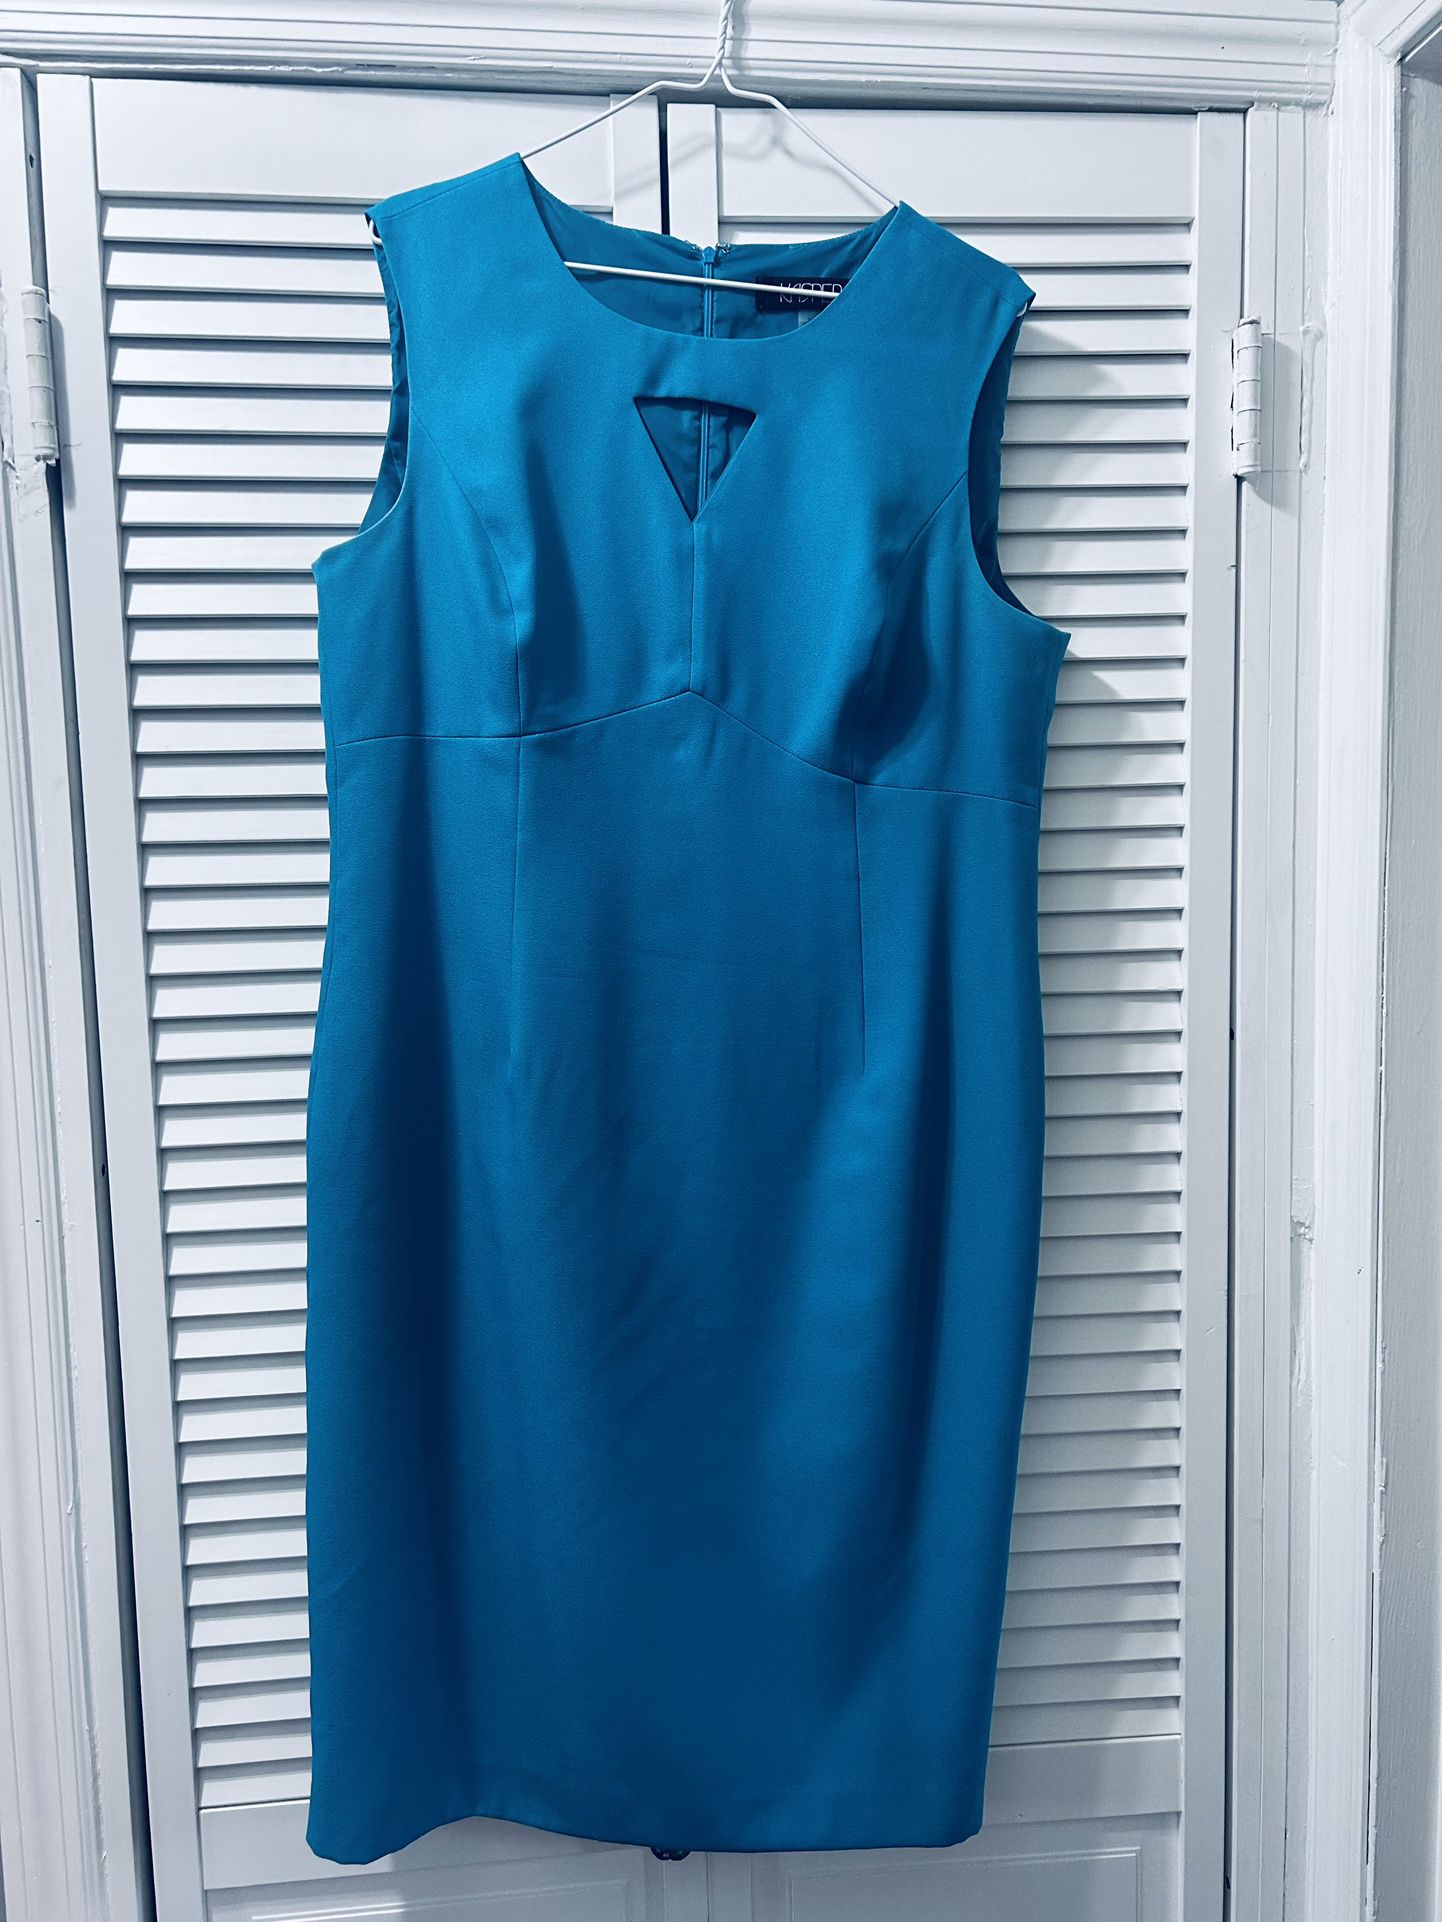 Size 14Turquoise. Dress With jacket . Kasper Brand . 